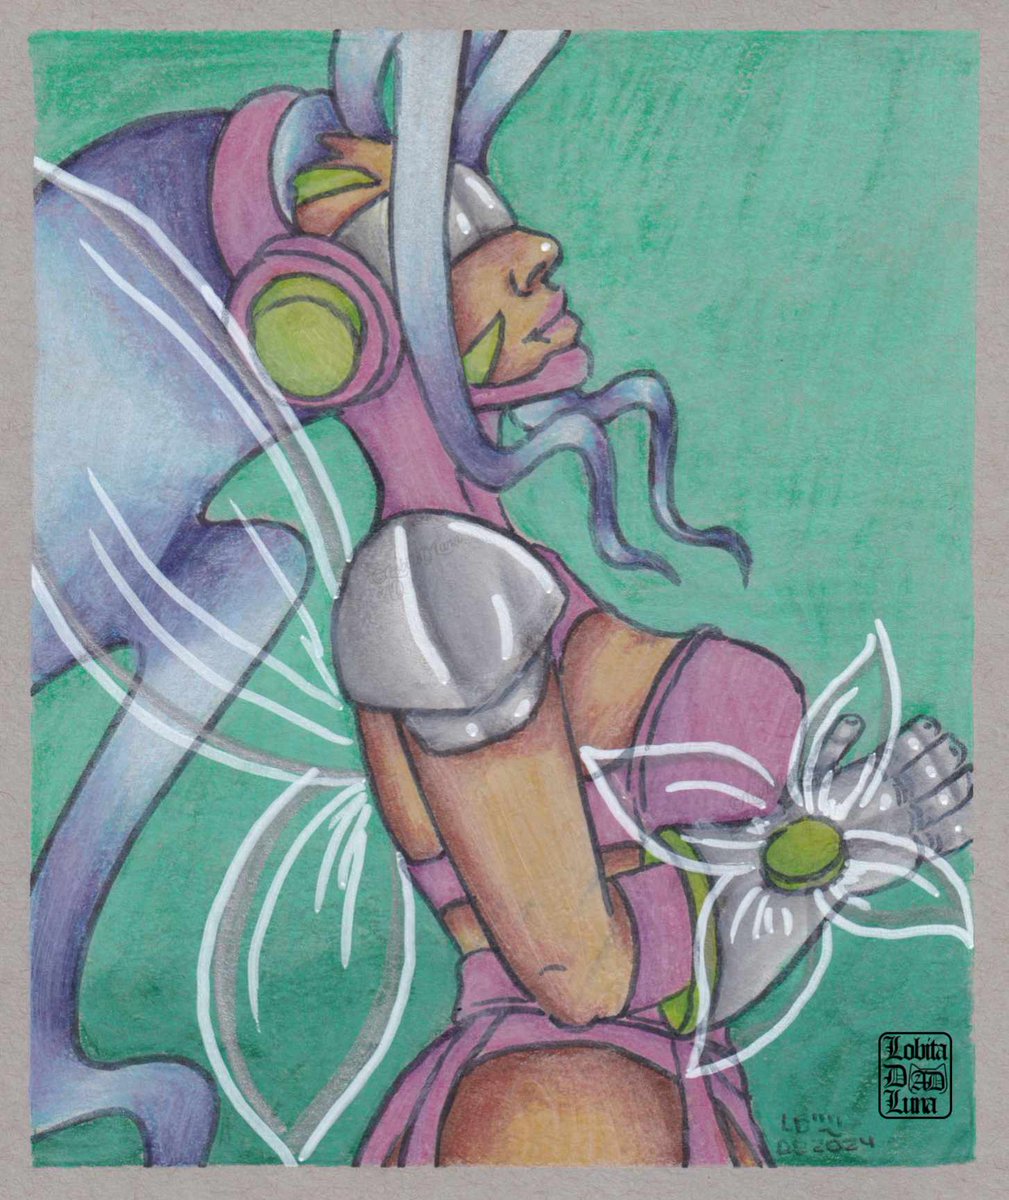 Fairimon
Fanart made on Strathmore toned paper with Fantasia Artist Colour Colored Pencils.
#draw #drawing #coloredpencil #coloredpencils #sketch #sketchbook #art #artwork #fantasia #strathmore #tonedpaper #fanart